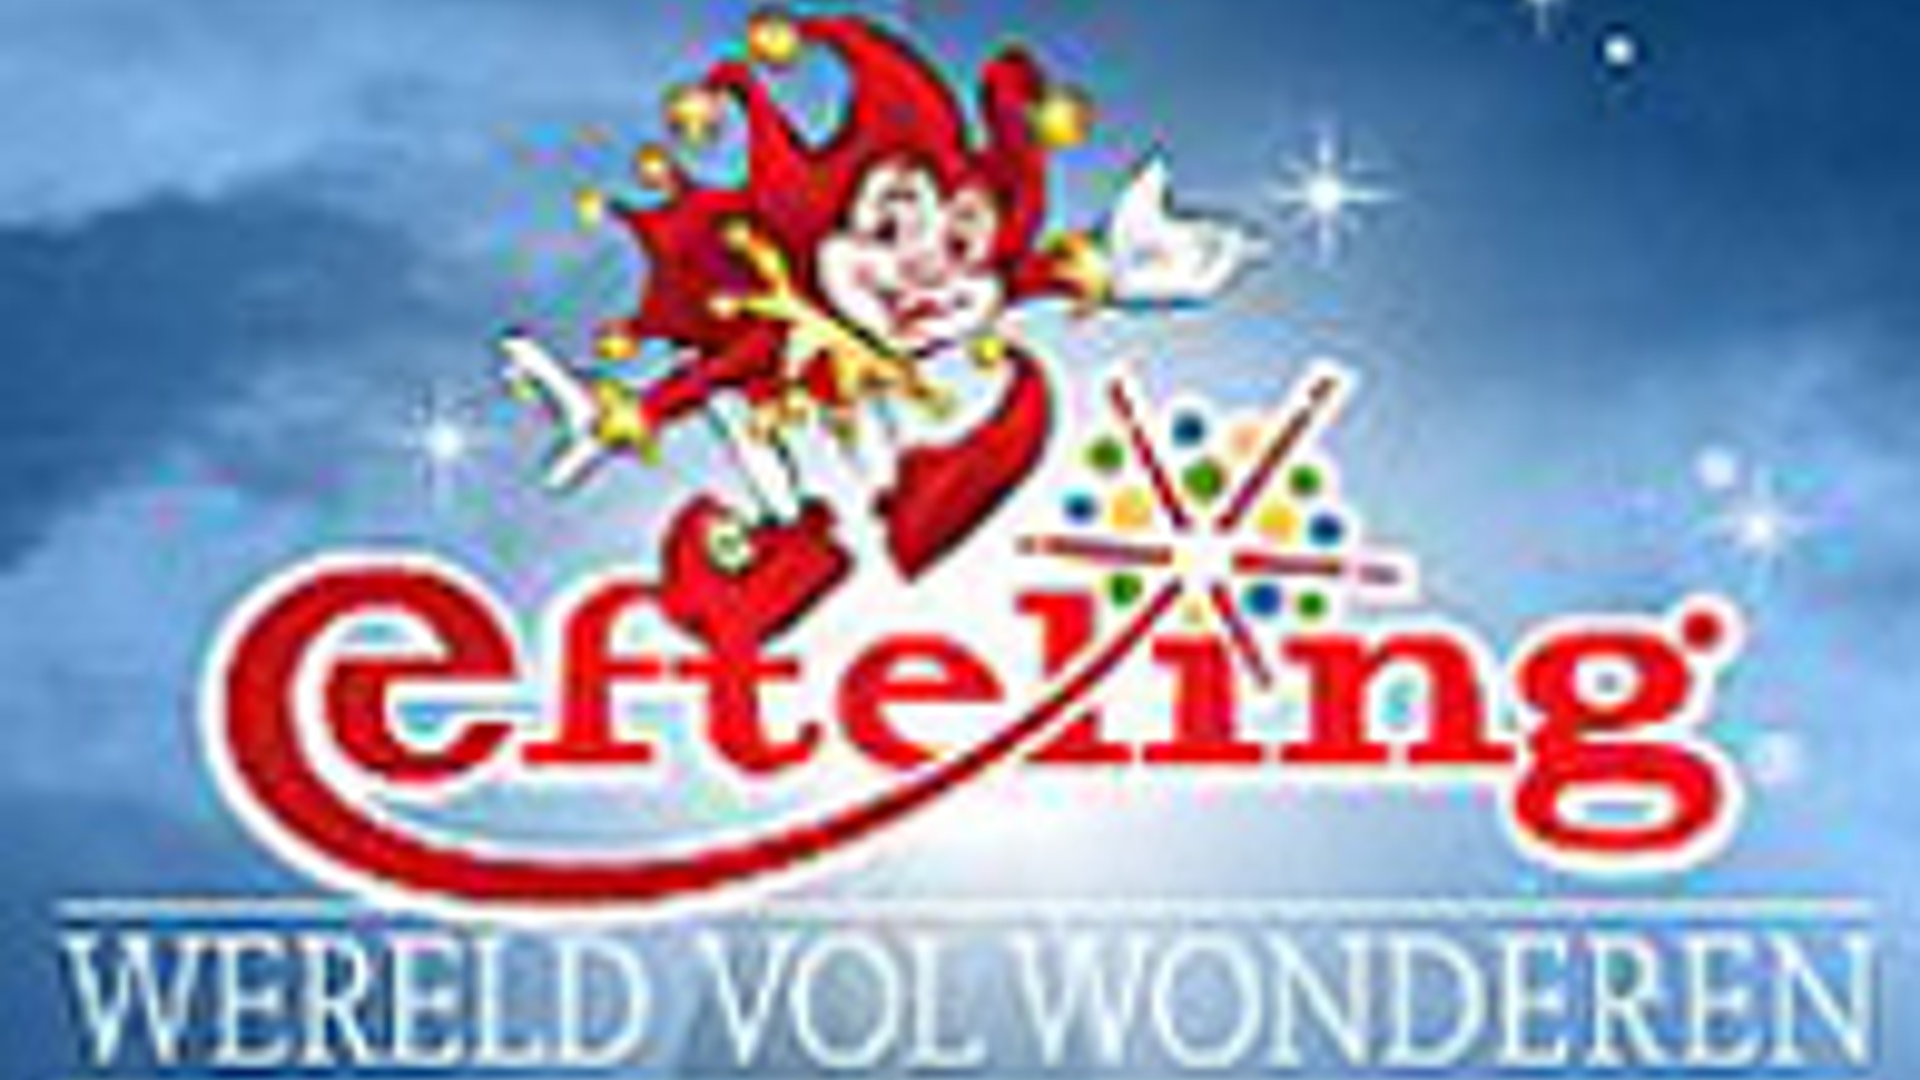 Efteling_logo_03.jpeg